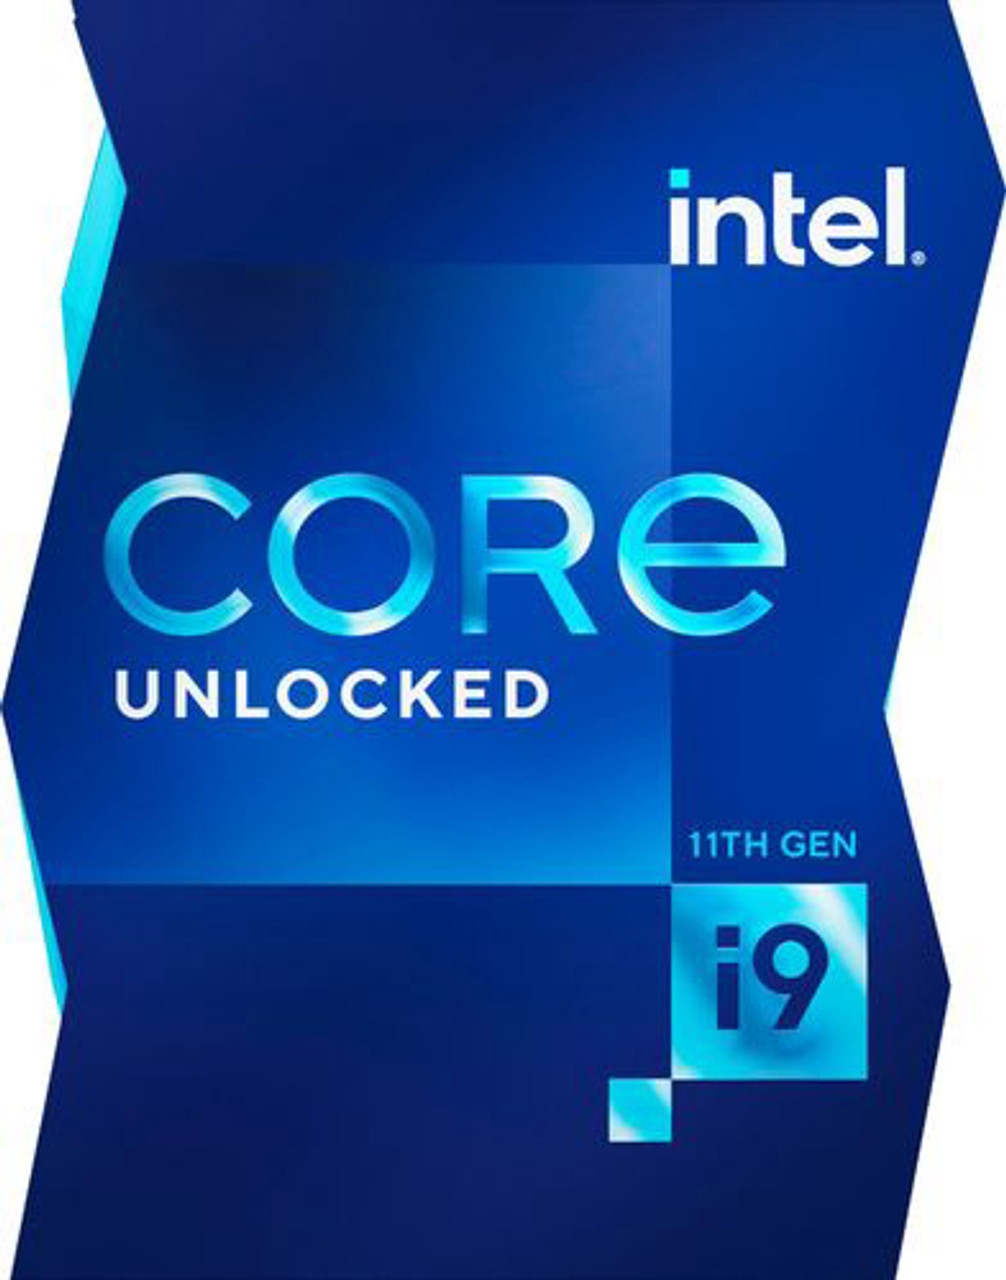 Intel - Core i9-11900K 11th Generation - 8 Core - 16 Thread - 3.5 to 5.3 GHz - LGA1200 - Unlocked Desktop Processor